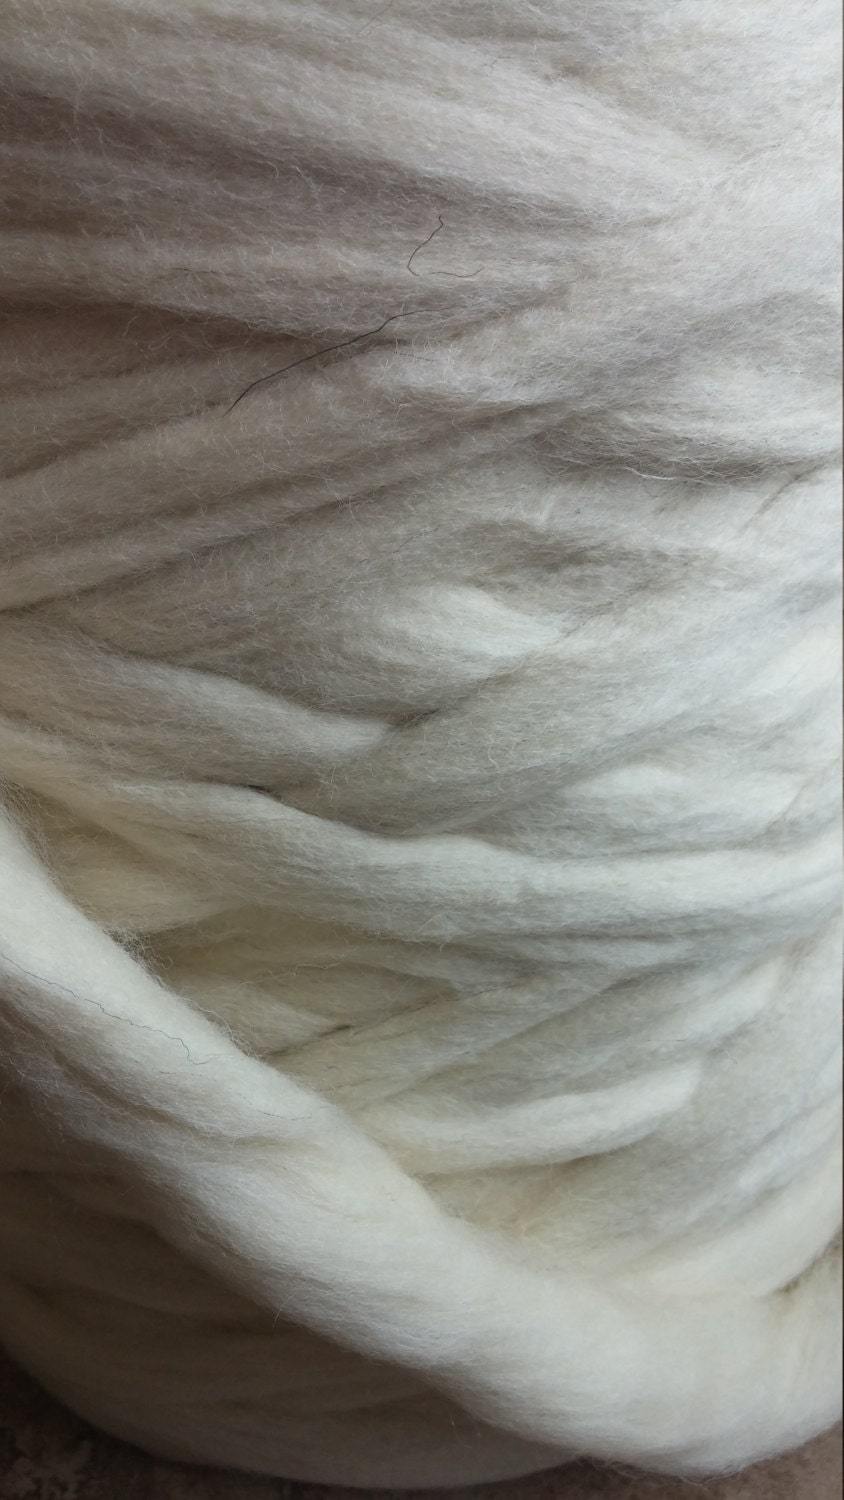 2 lbs White Wool Top Roving